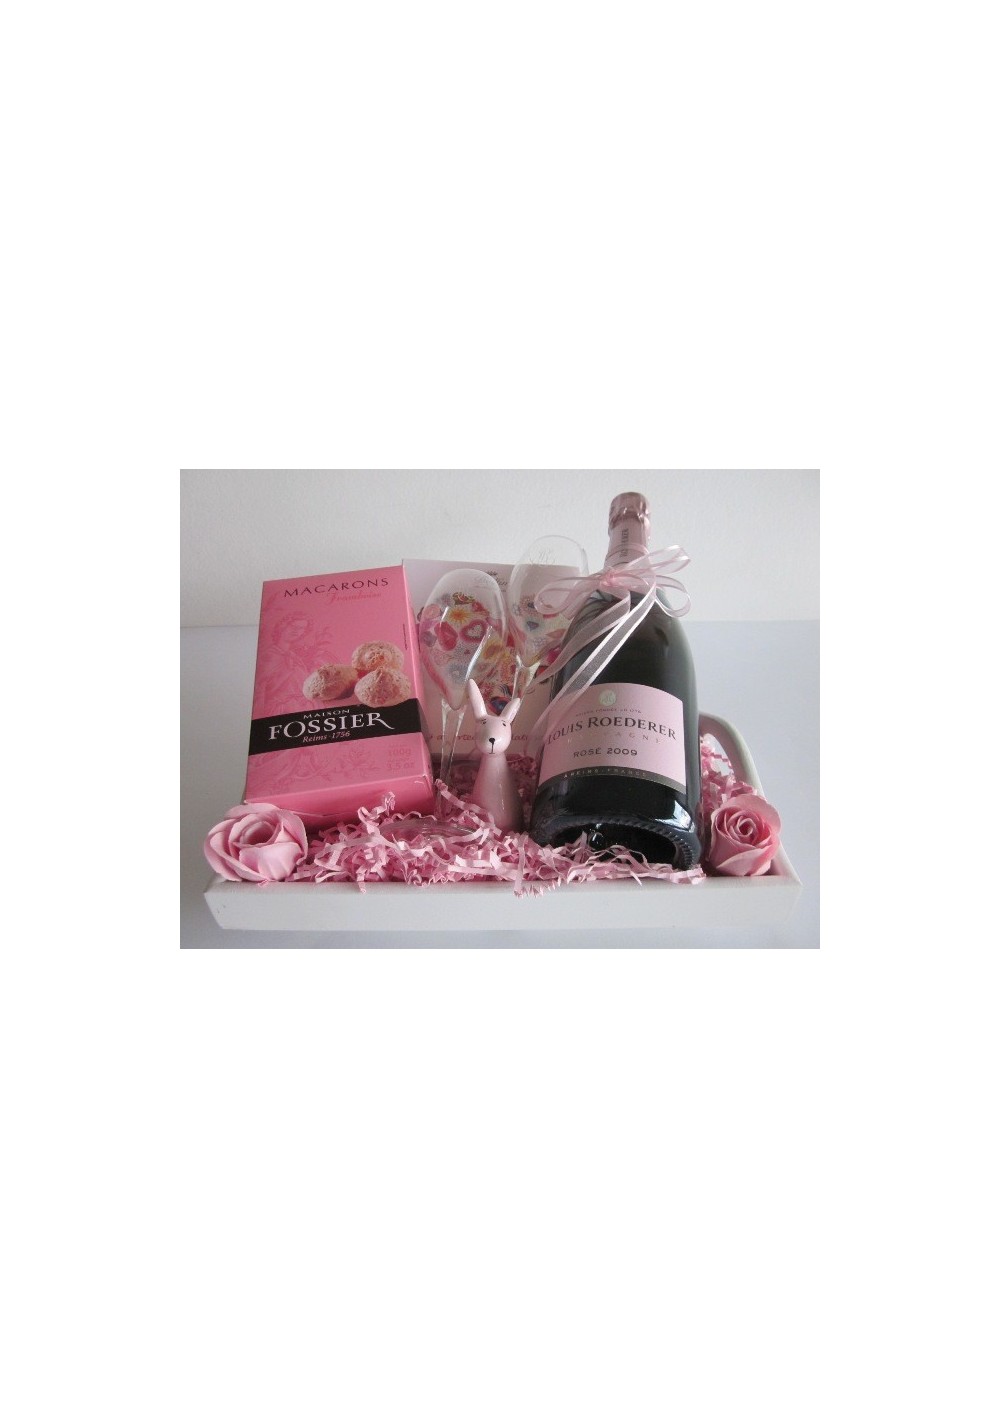 Rosé champagne birth gift basket